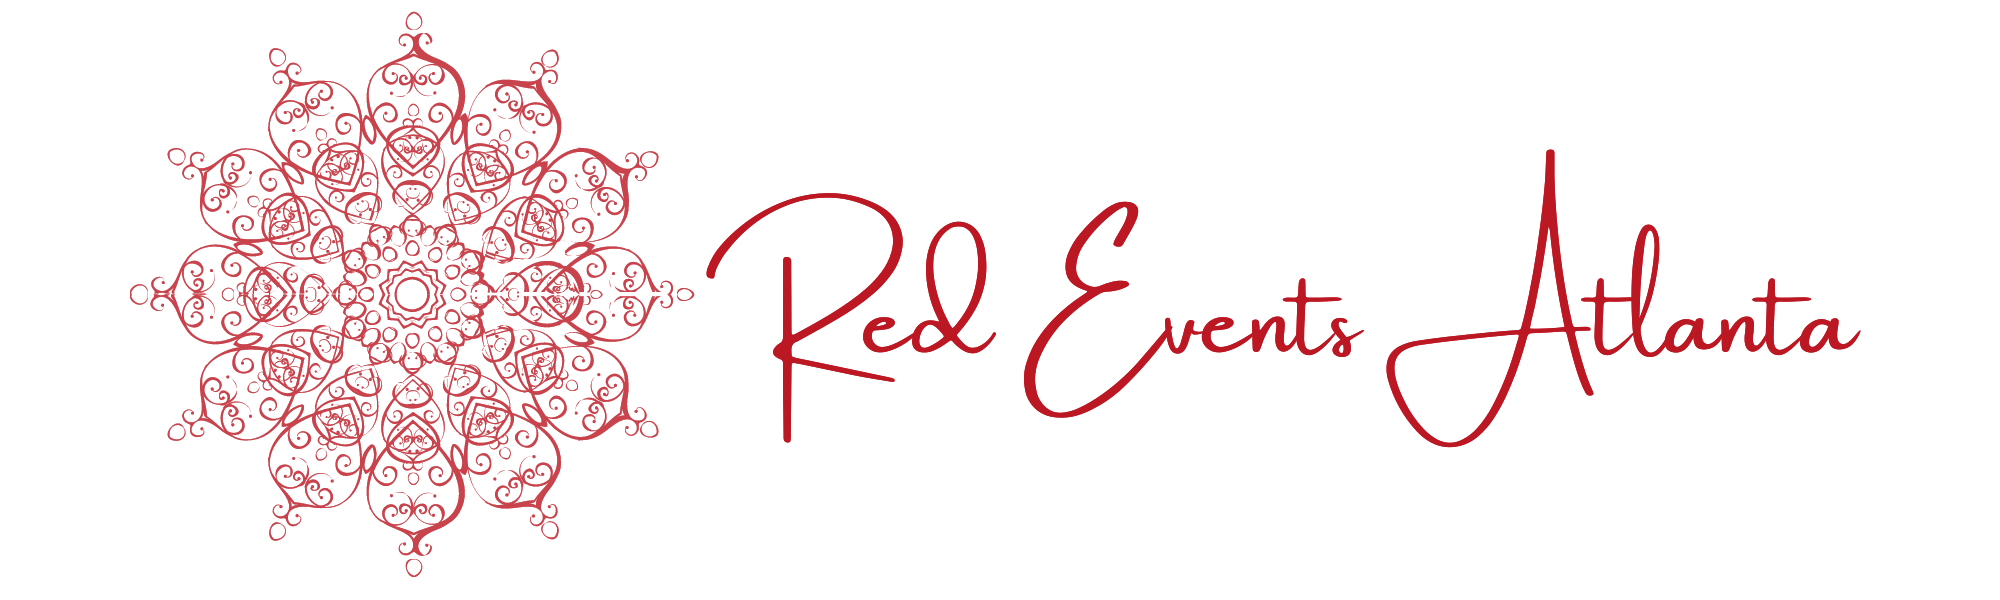 Red Events – Atlanta